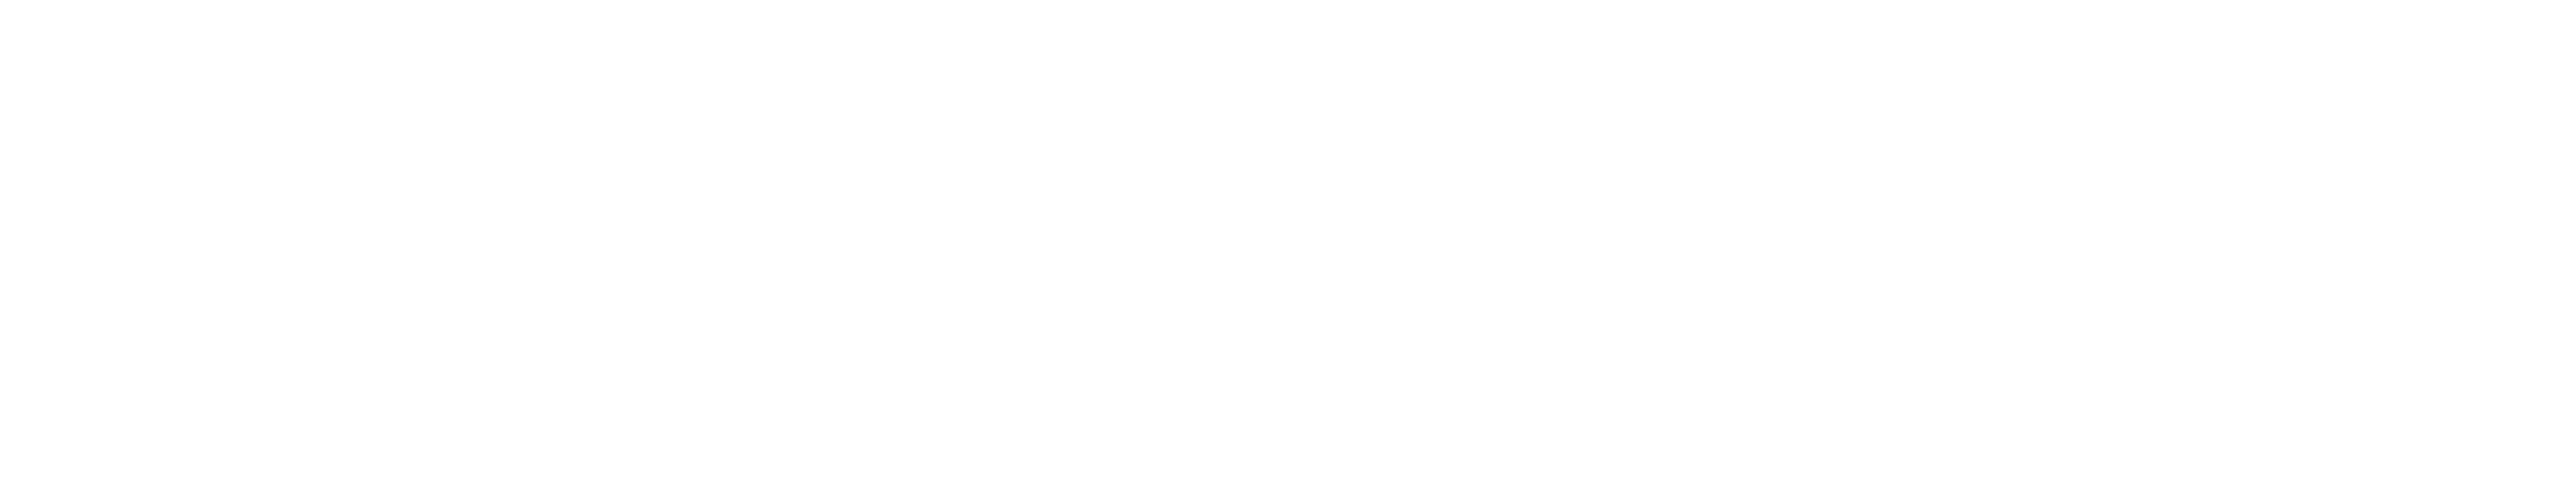 Gulfood Agrotech 2024